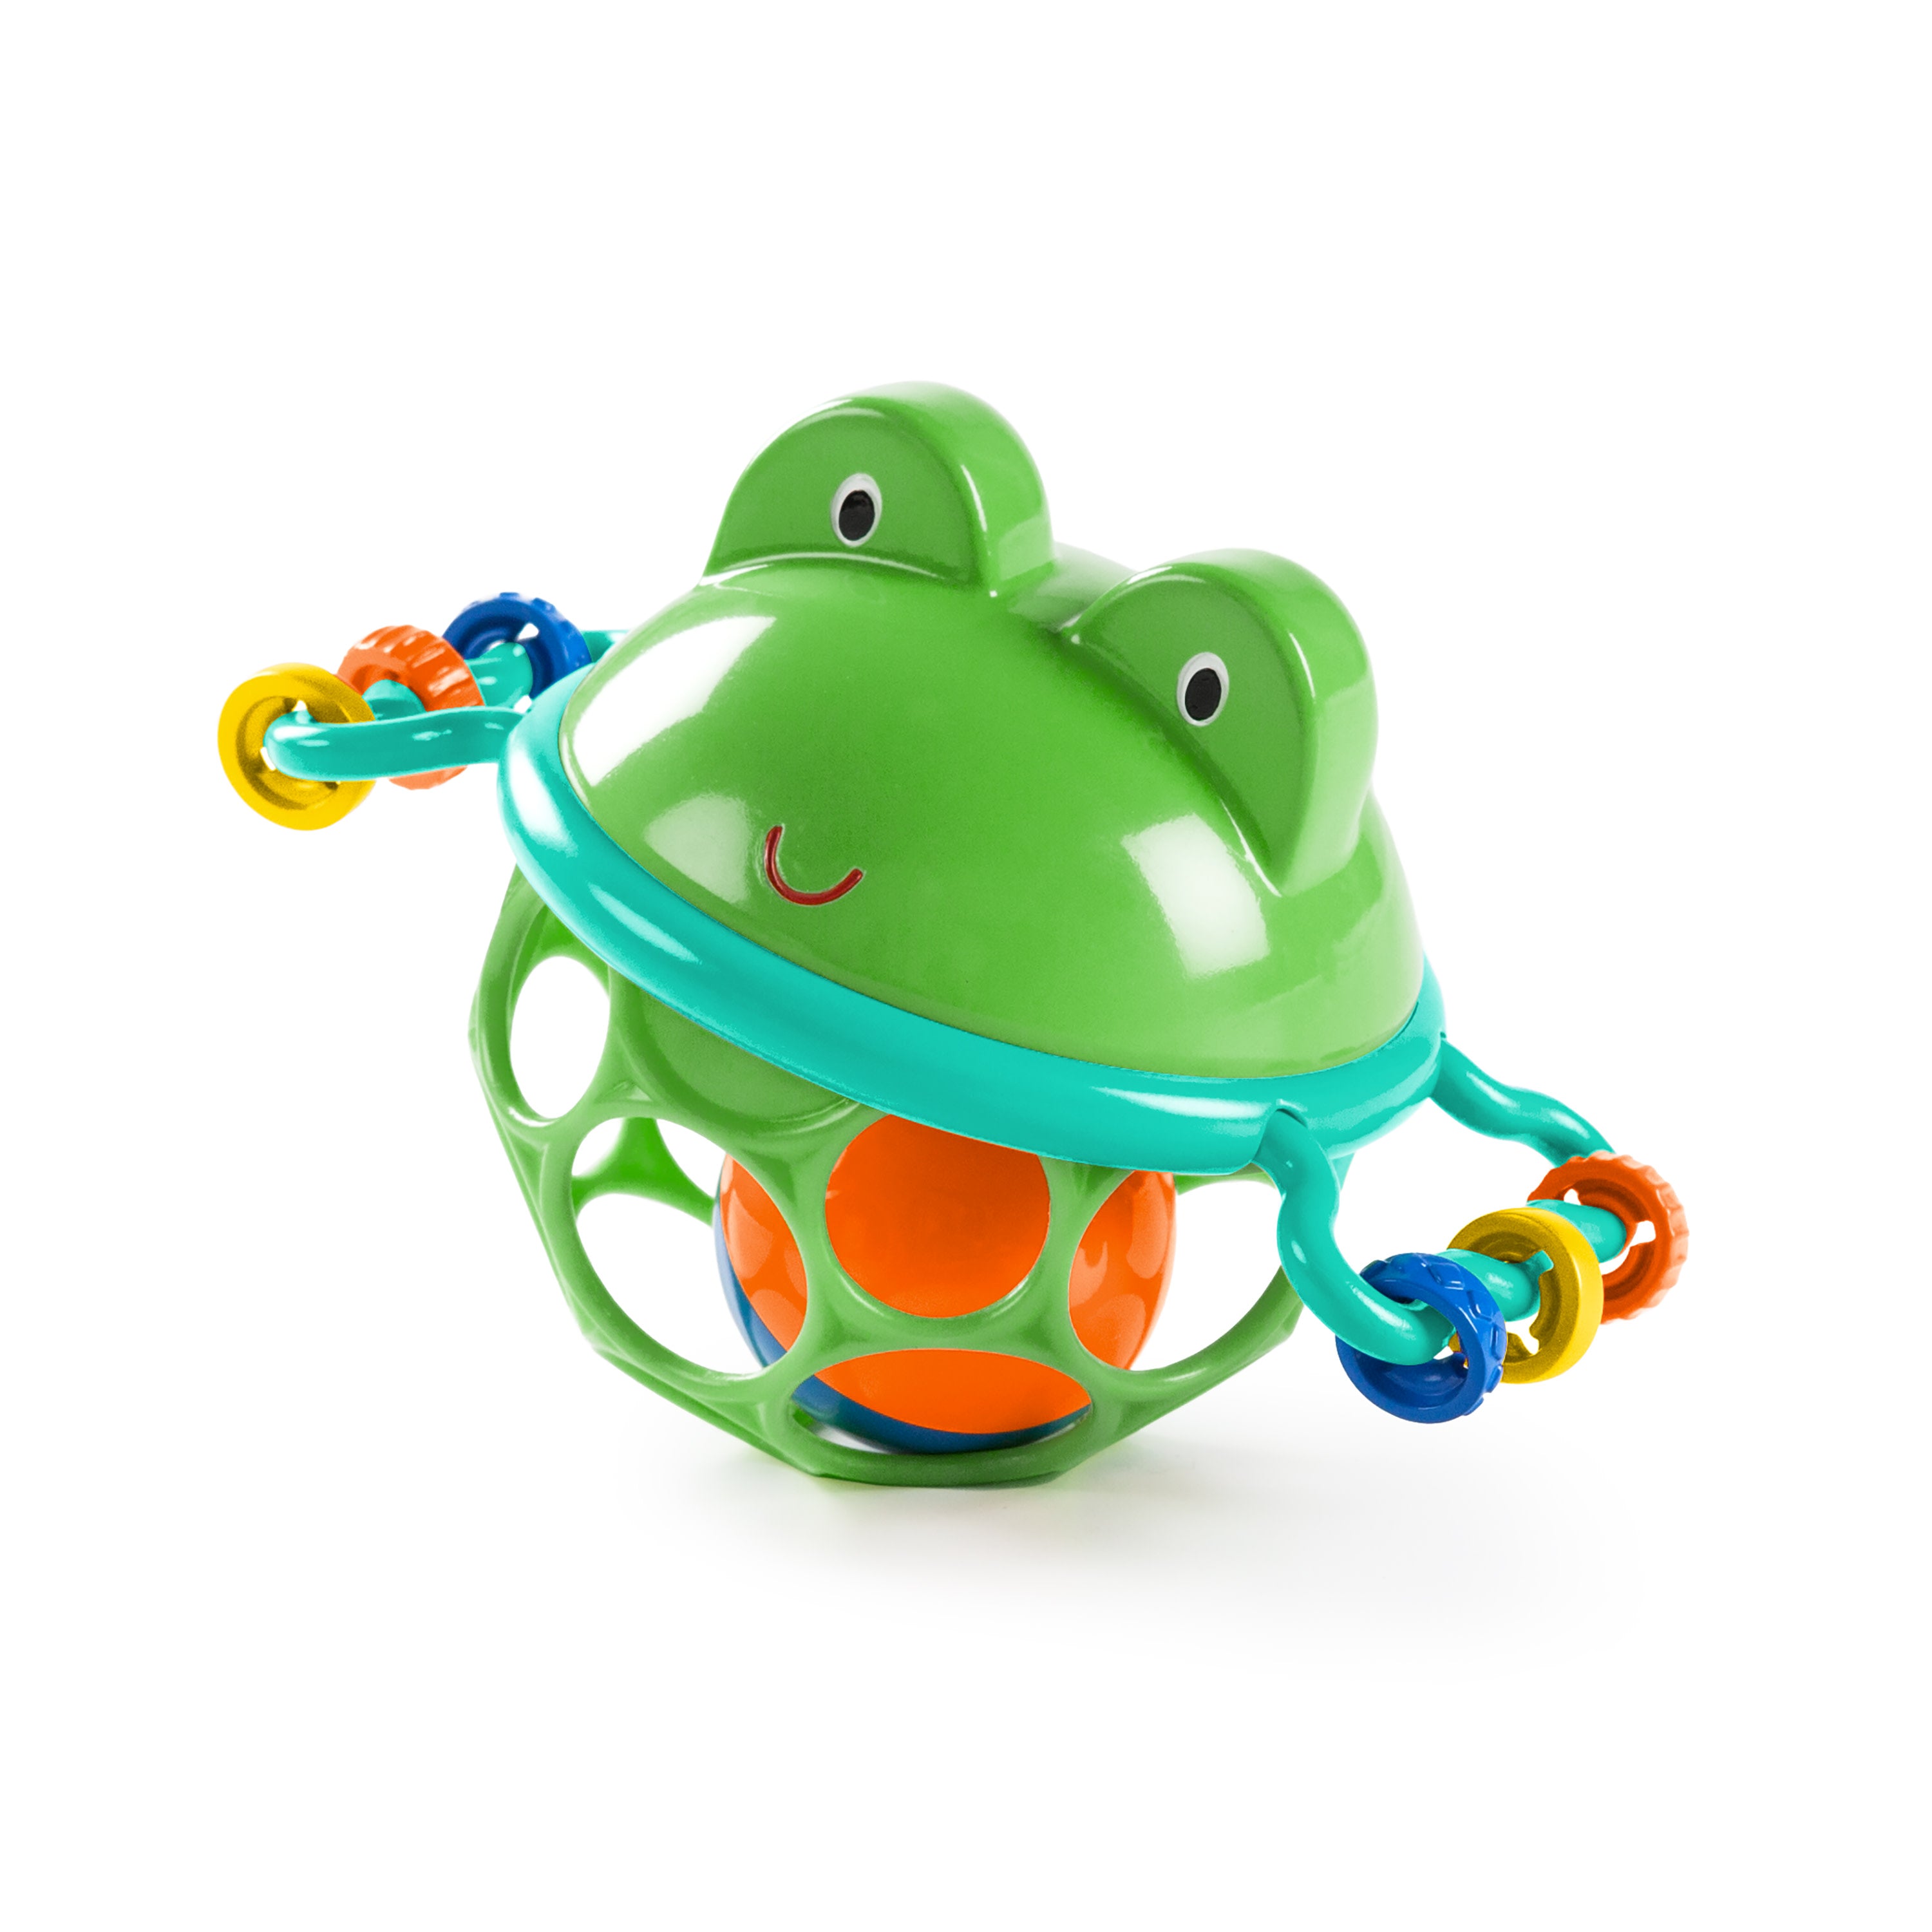 Oball shaker toy baby rattle gift – RockerByeRetail